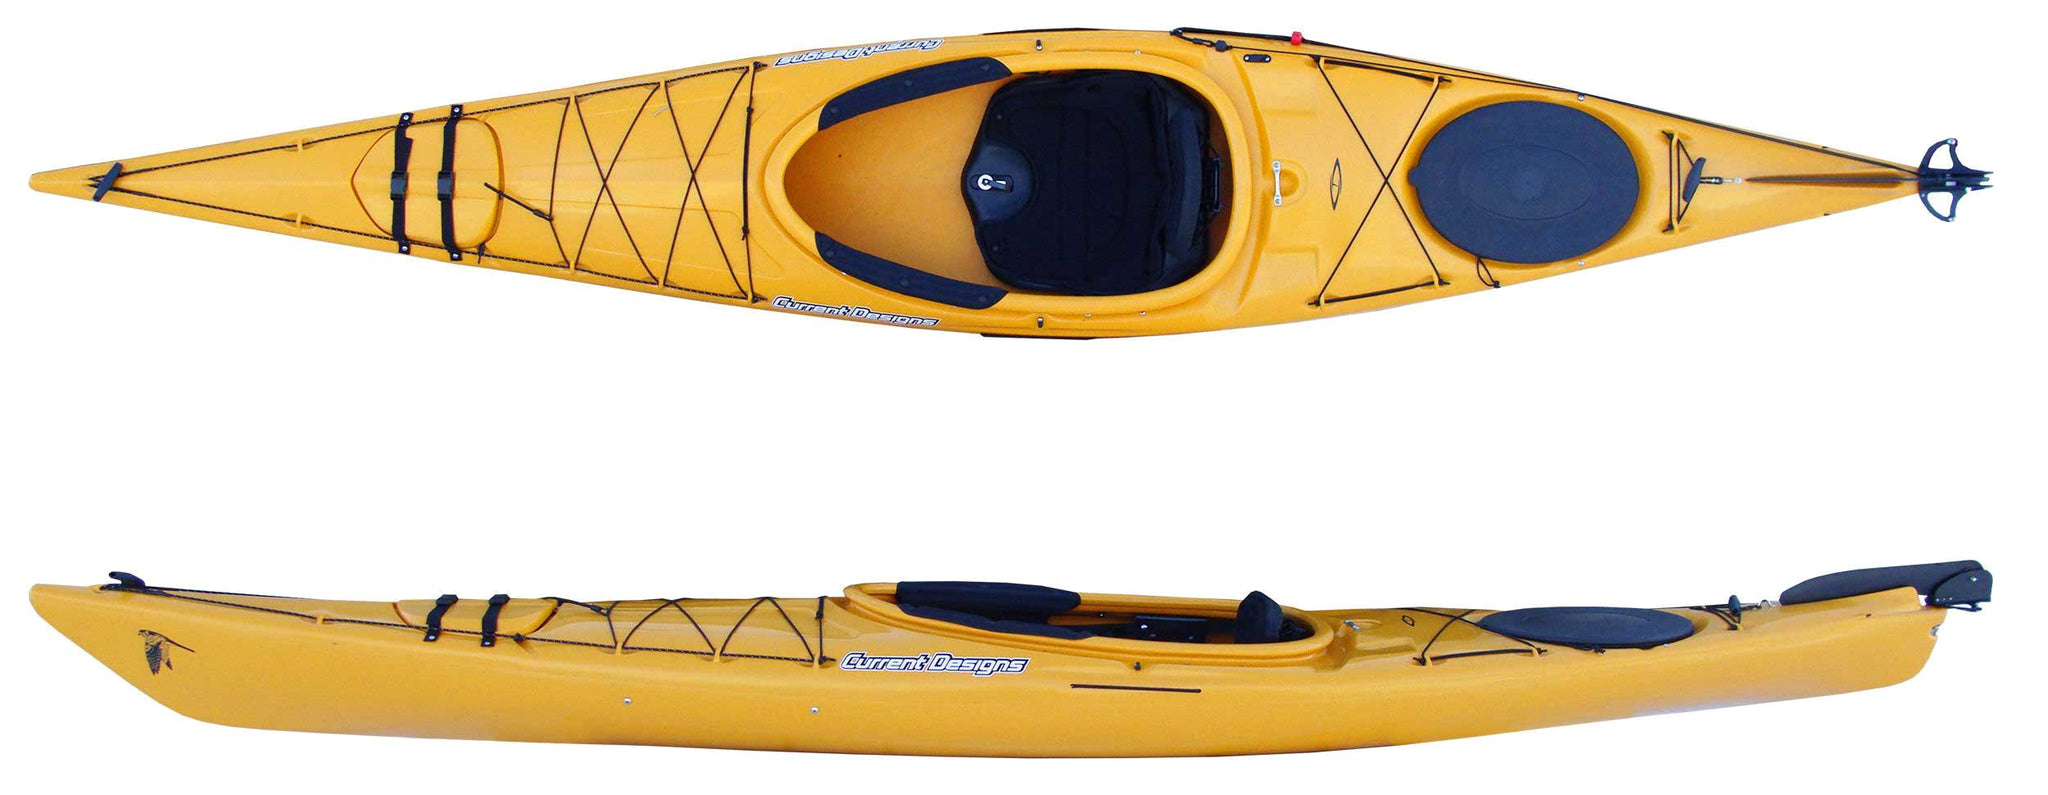 Kestsrel 140R Recreational Kayak